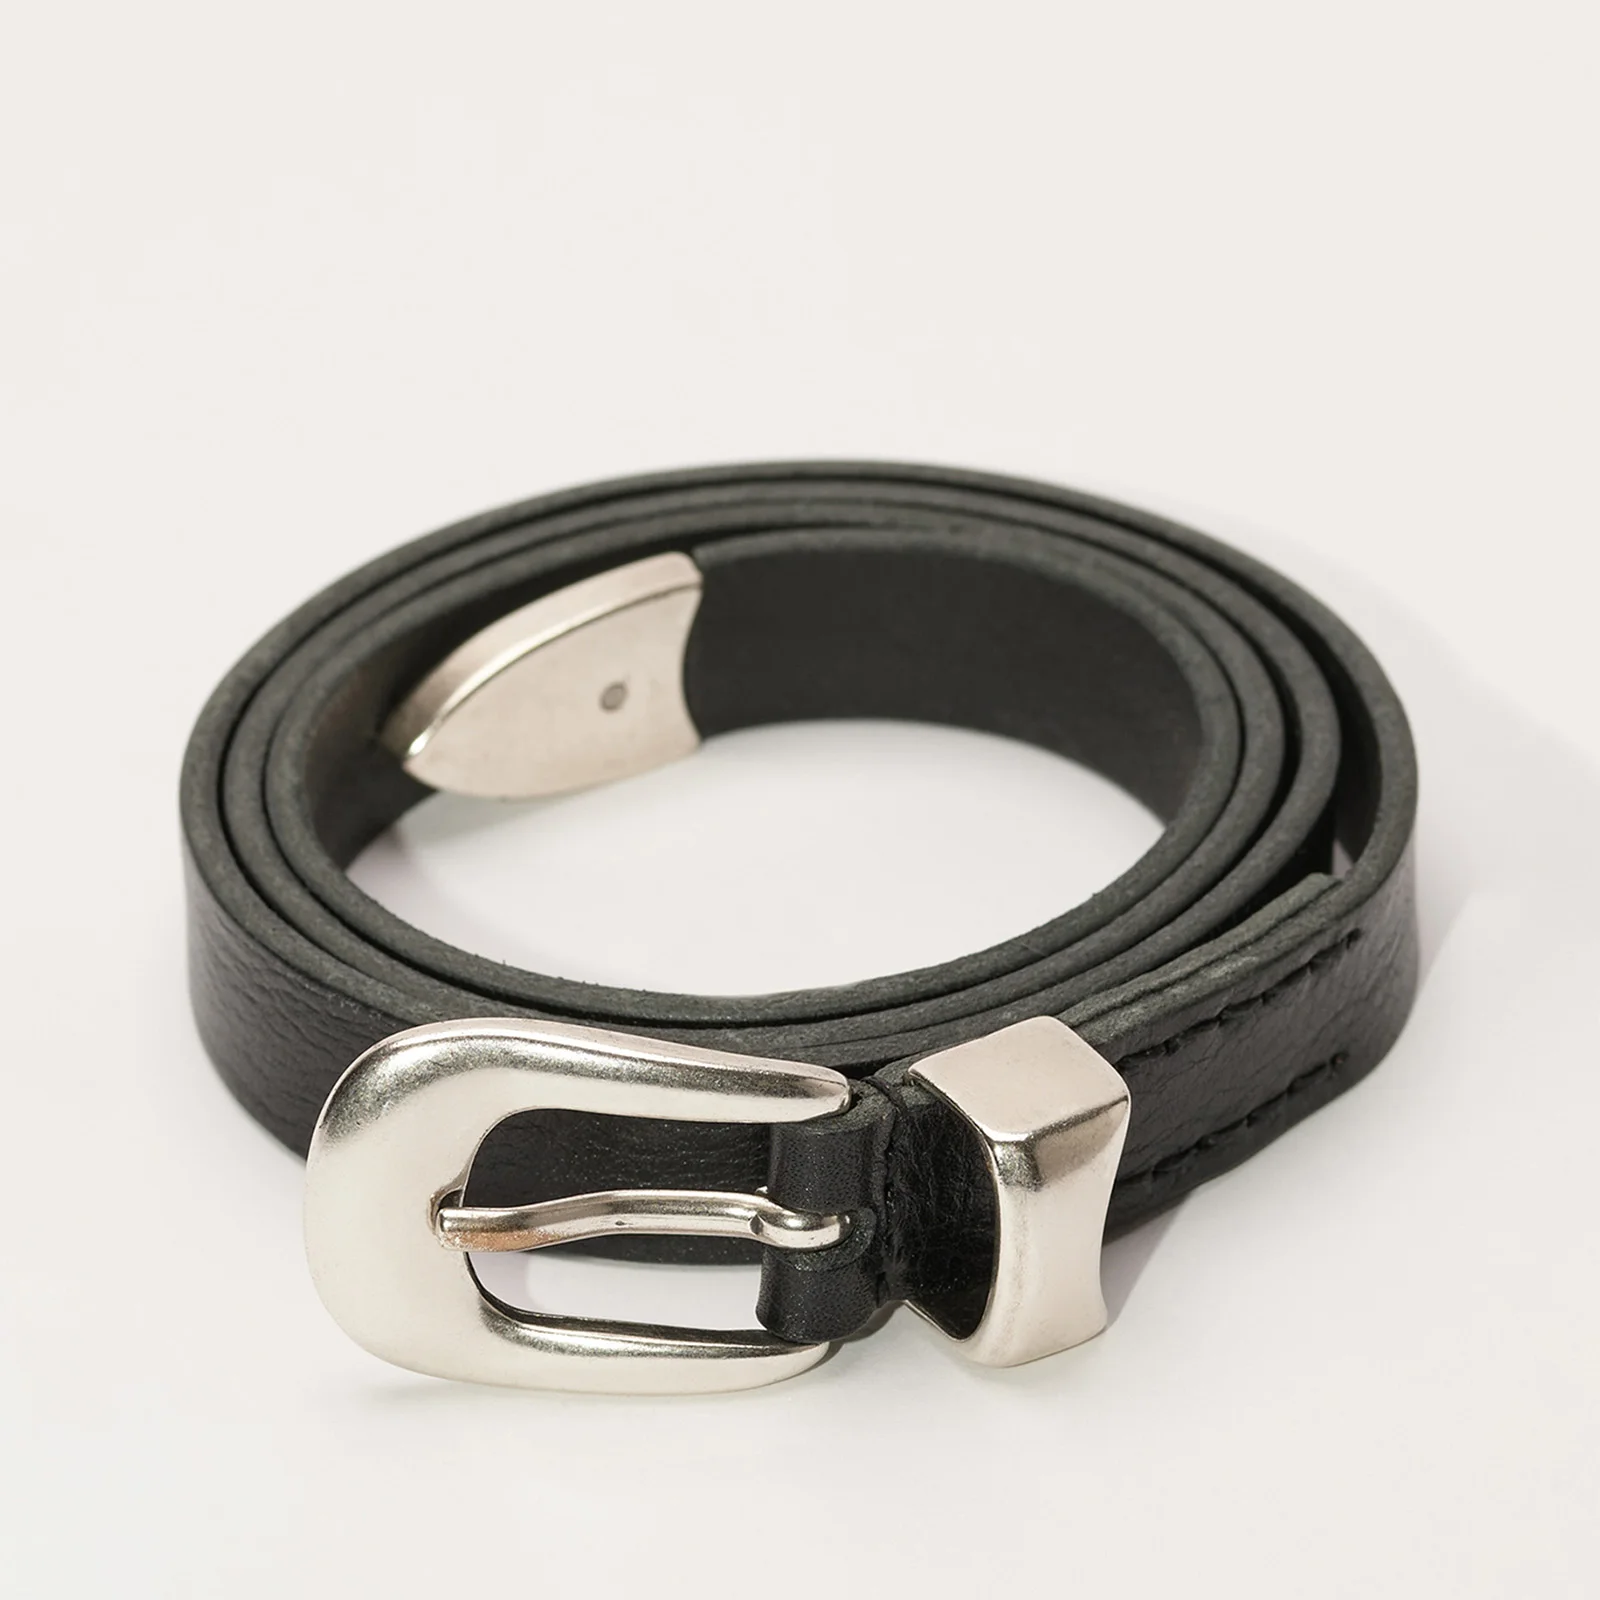 Our Legacy Men's 2cm Leather Belt - Black - 70cm Image 1